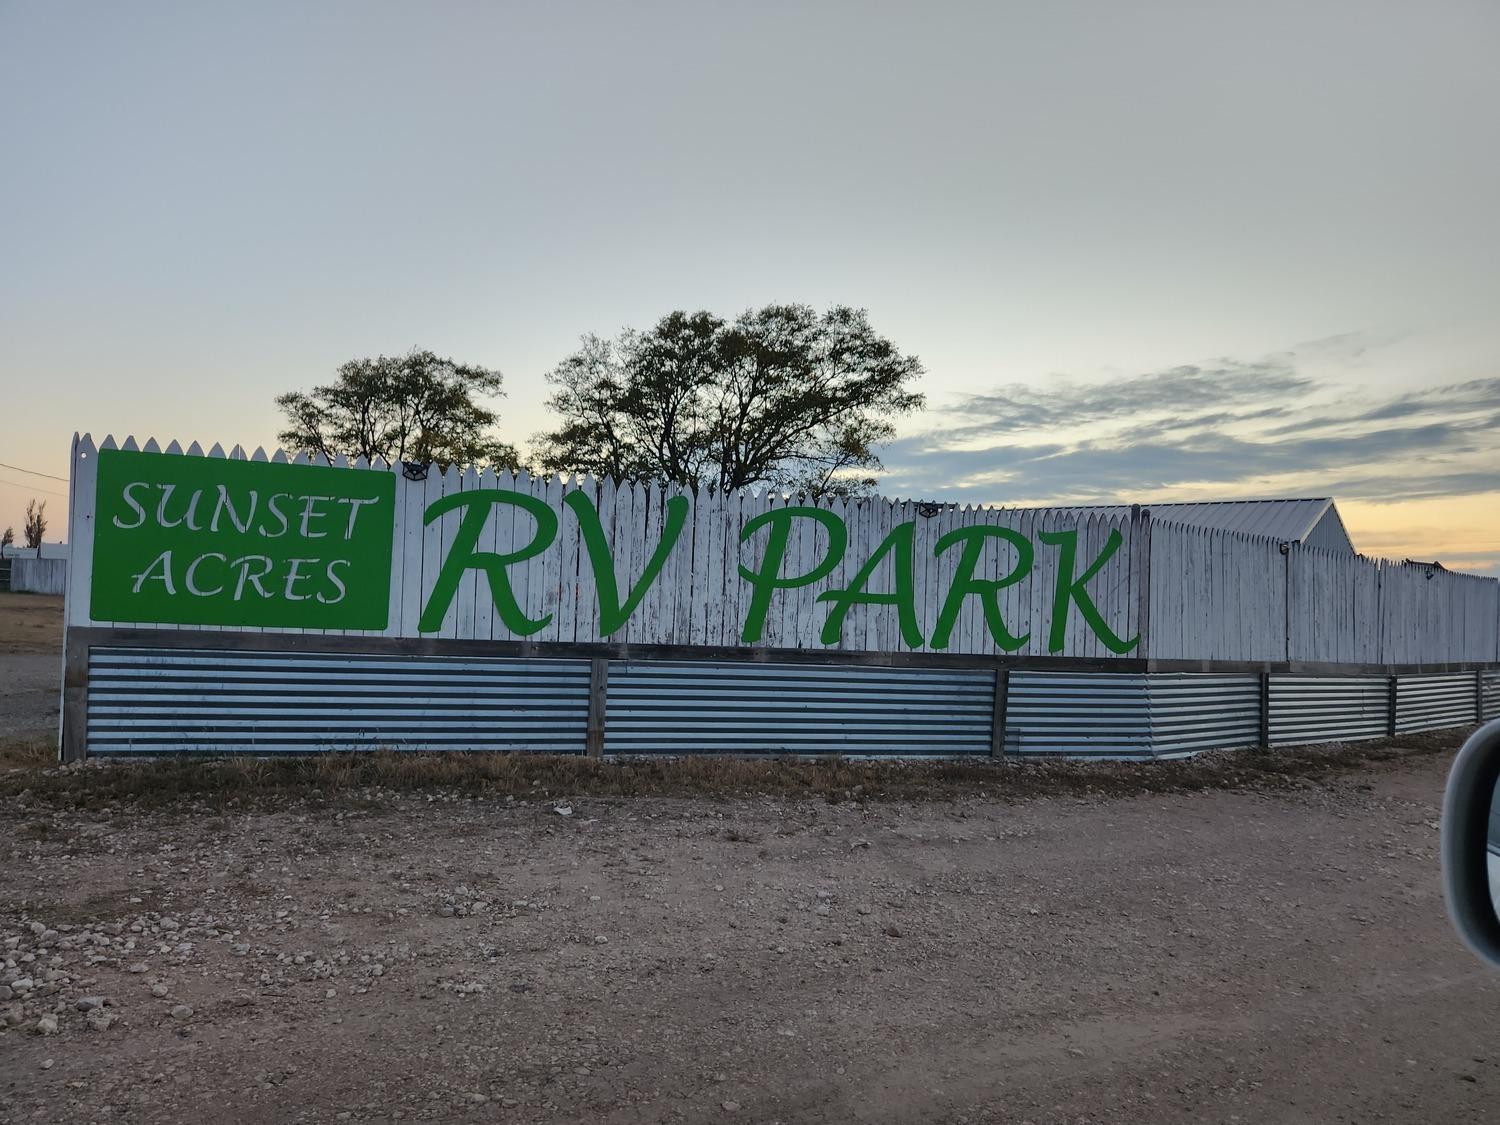 Sunset Acres RV Park